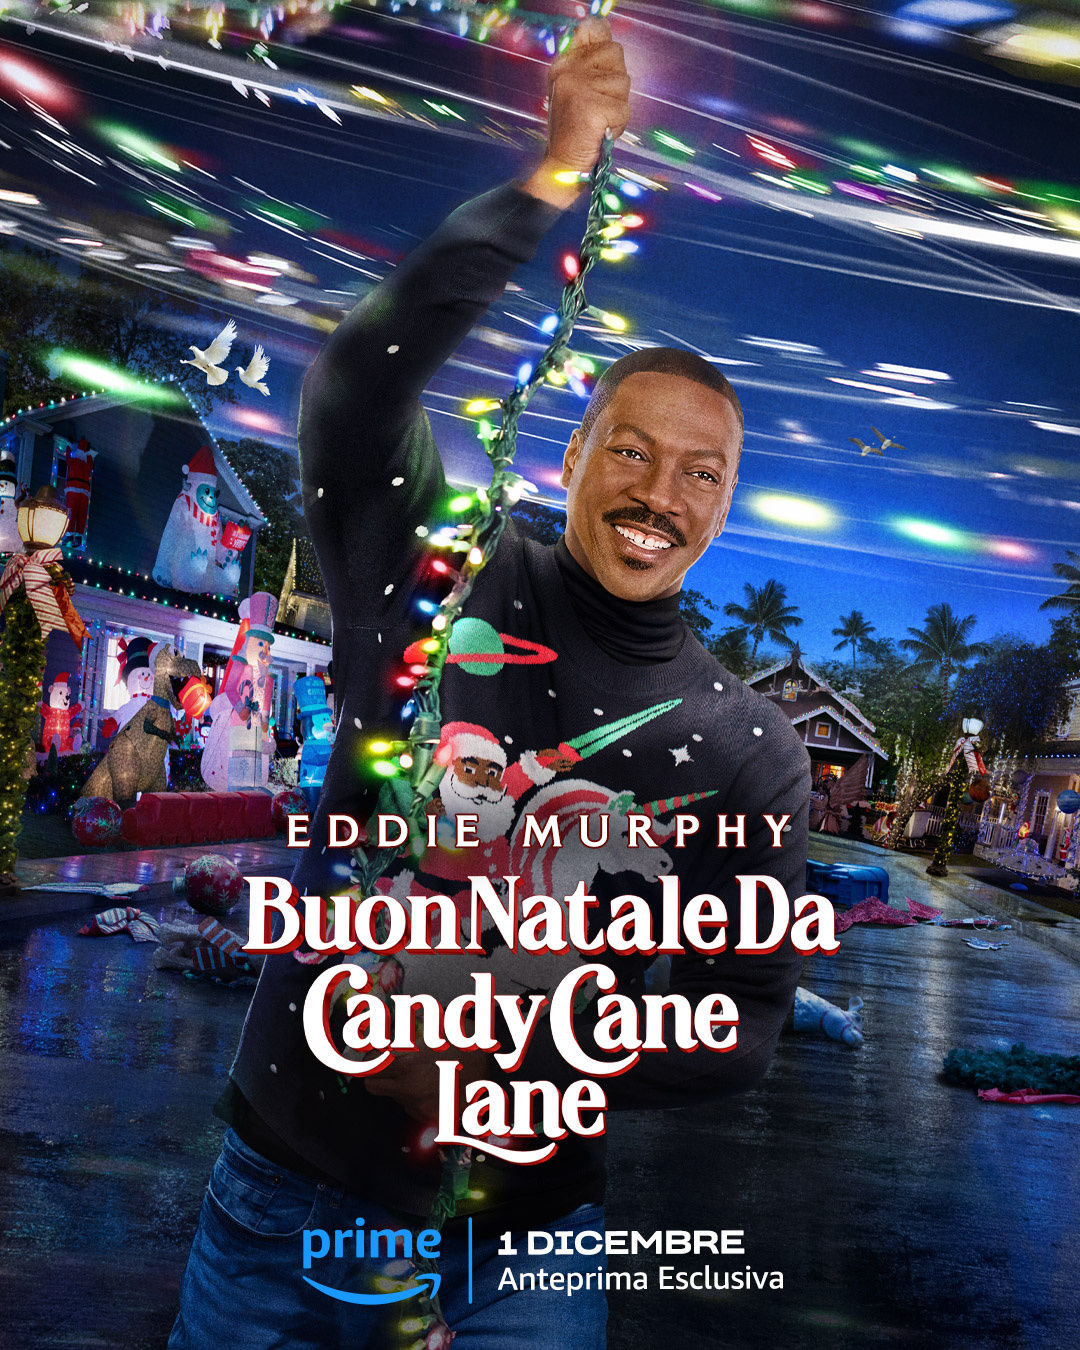 Buon Natale da Candy Cane Lane, di Reginald Hudlin